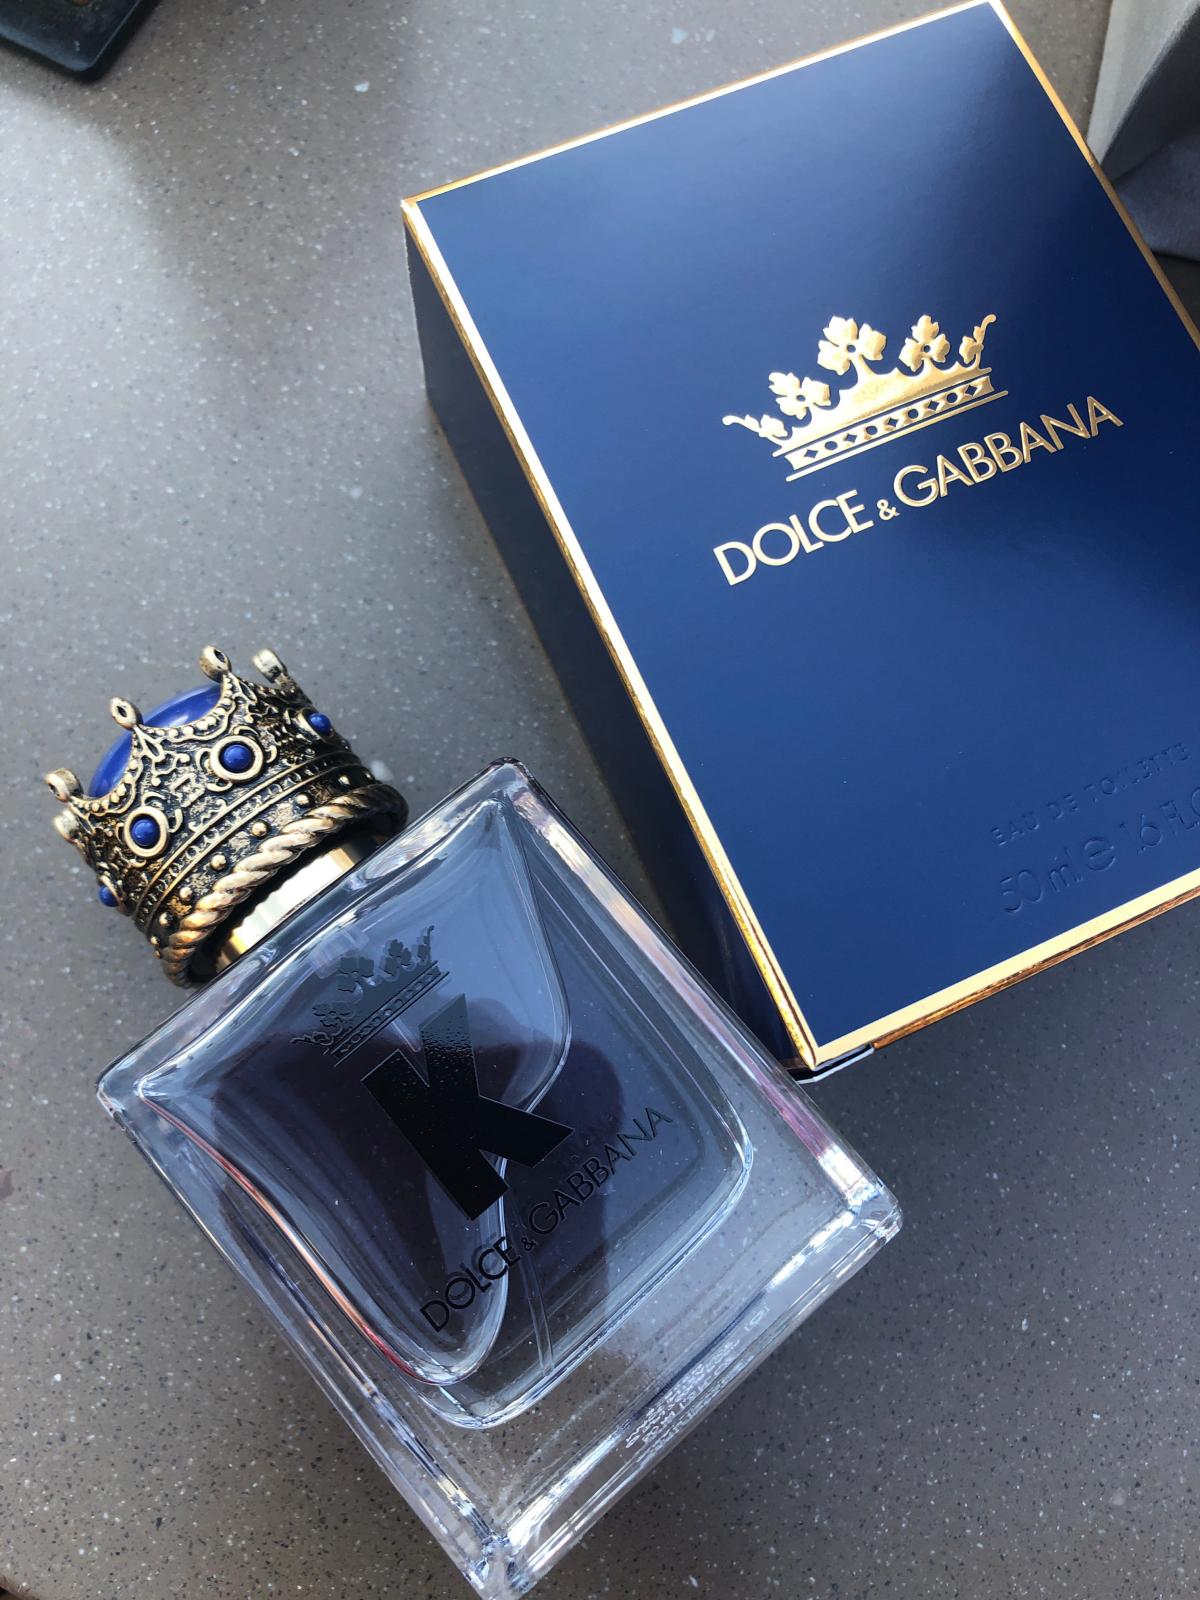 K by Dolce & Gabbana Dolce&Gabbana одеколон — новый аромат для мужчин 2019